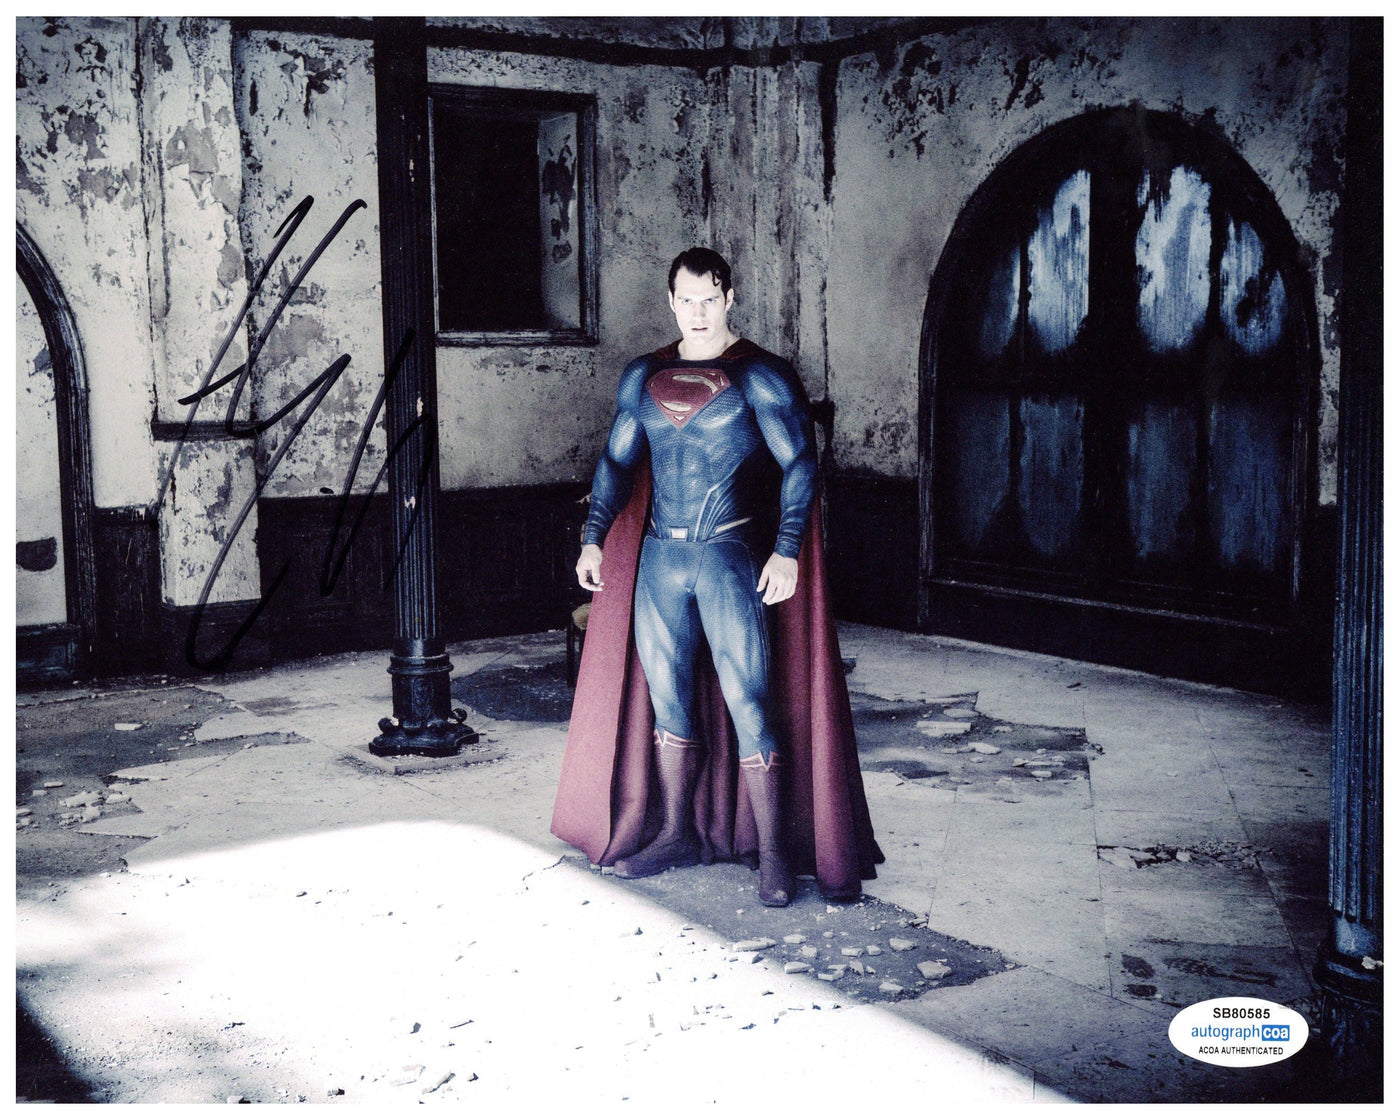 HENRY CAVILL SIGNED 8X10 PHOTO DC SUPERMAN AUTOGRAPHED ACOA 5